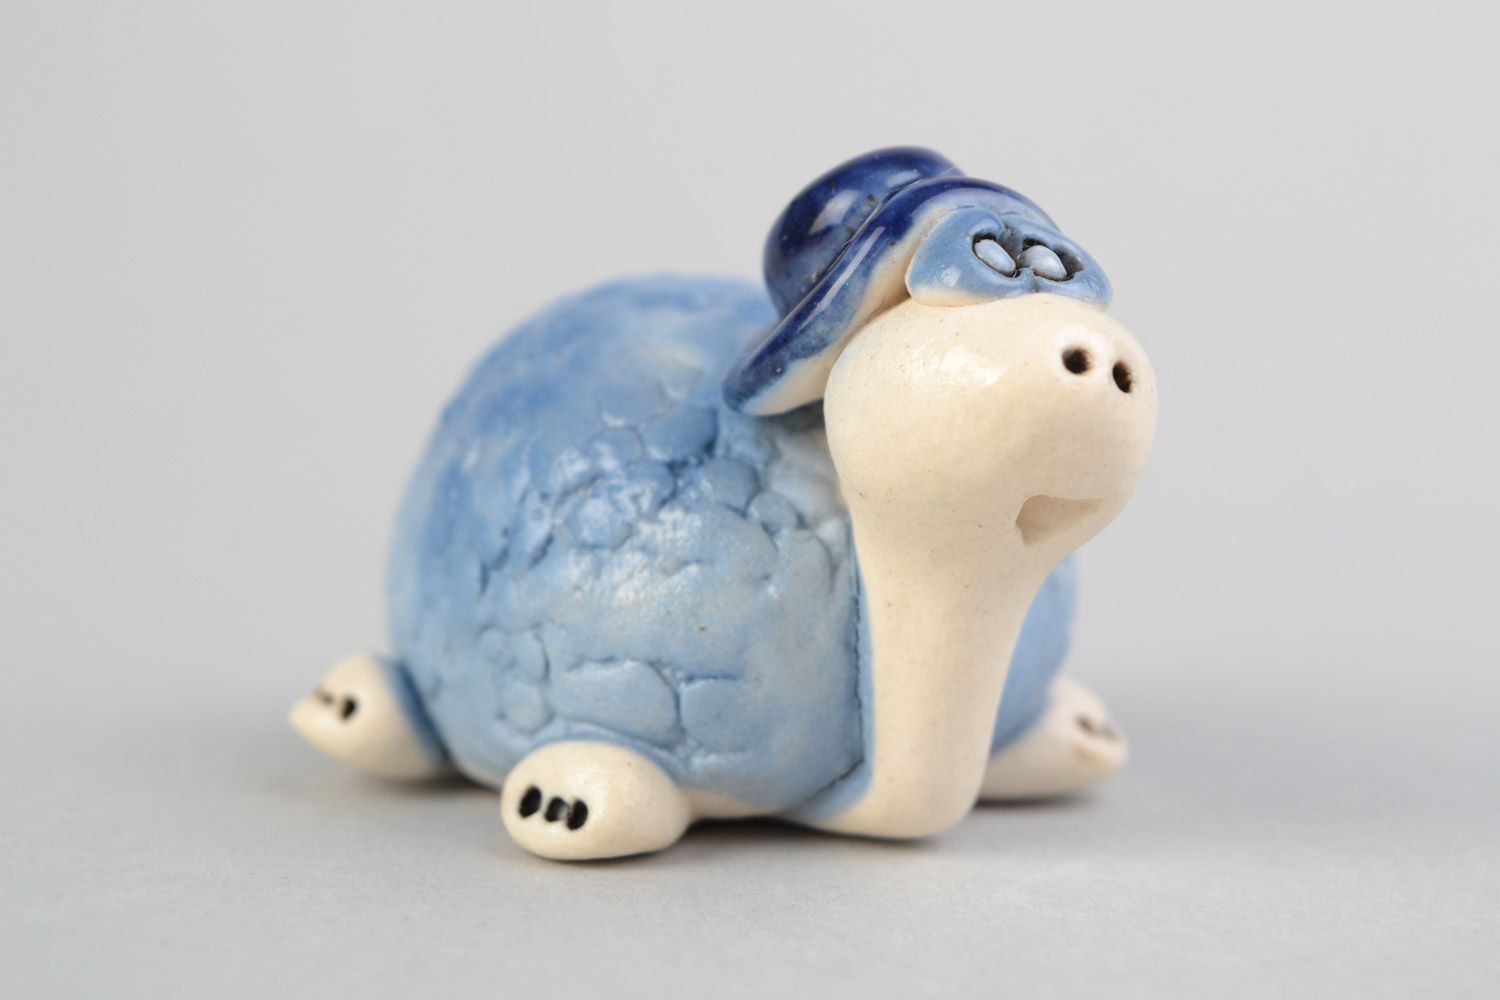 Handmade beautiful ceramic cute little blue painted turtle figurine for home decor photo 1